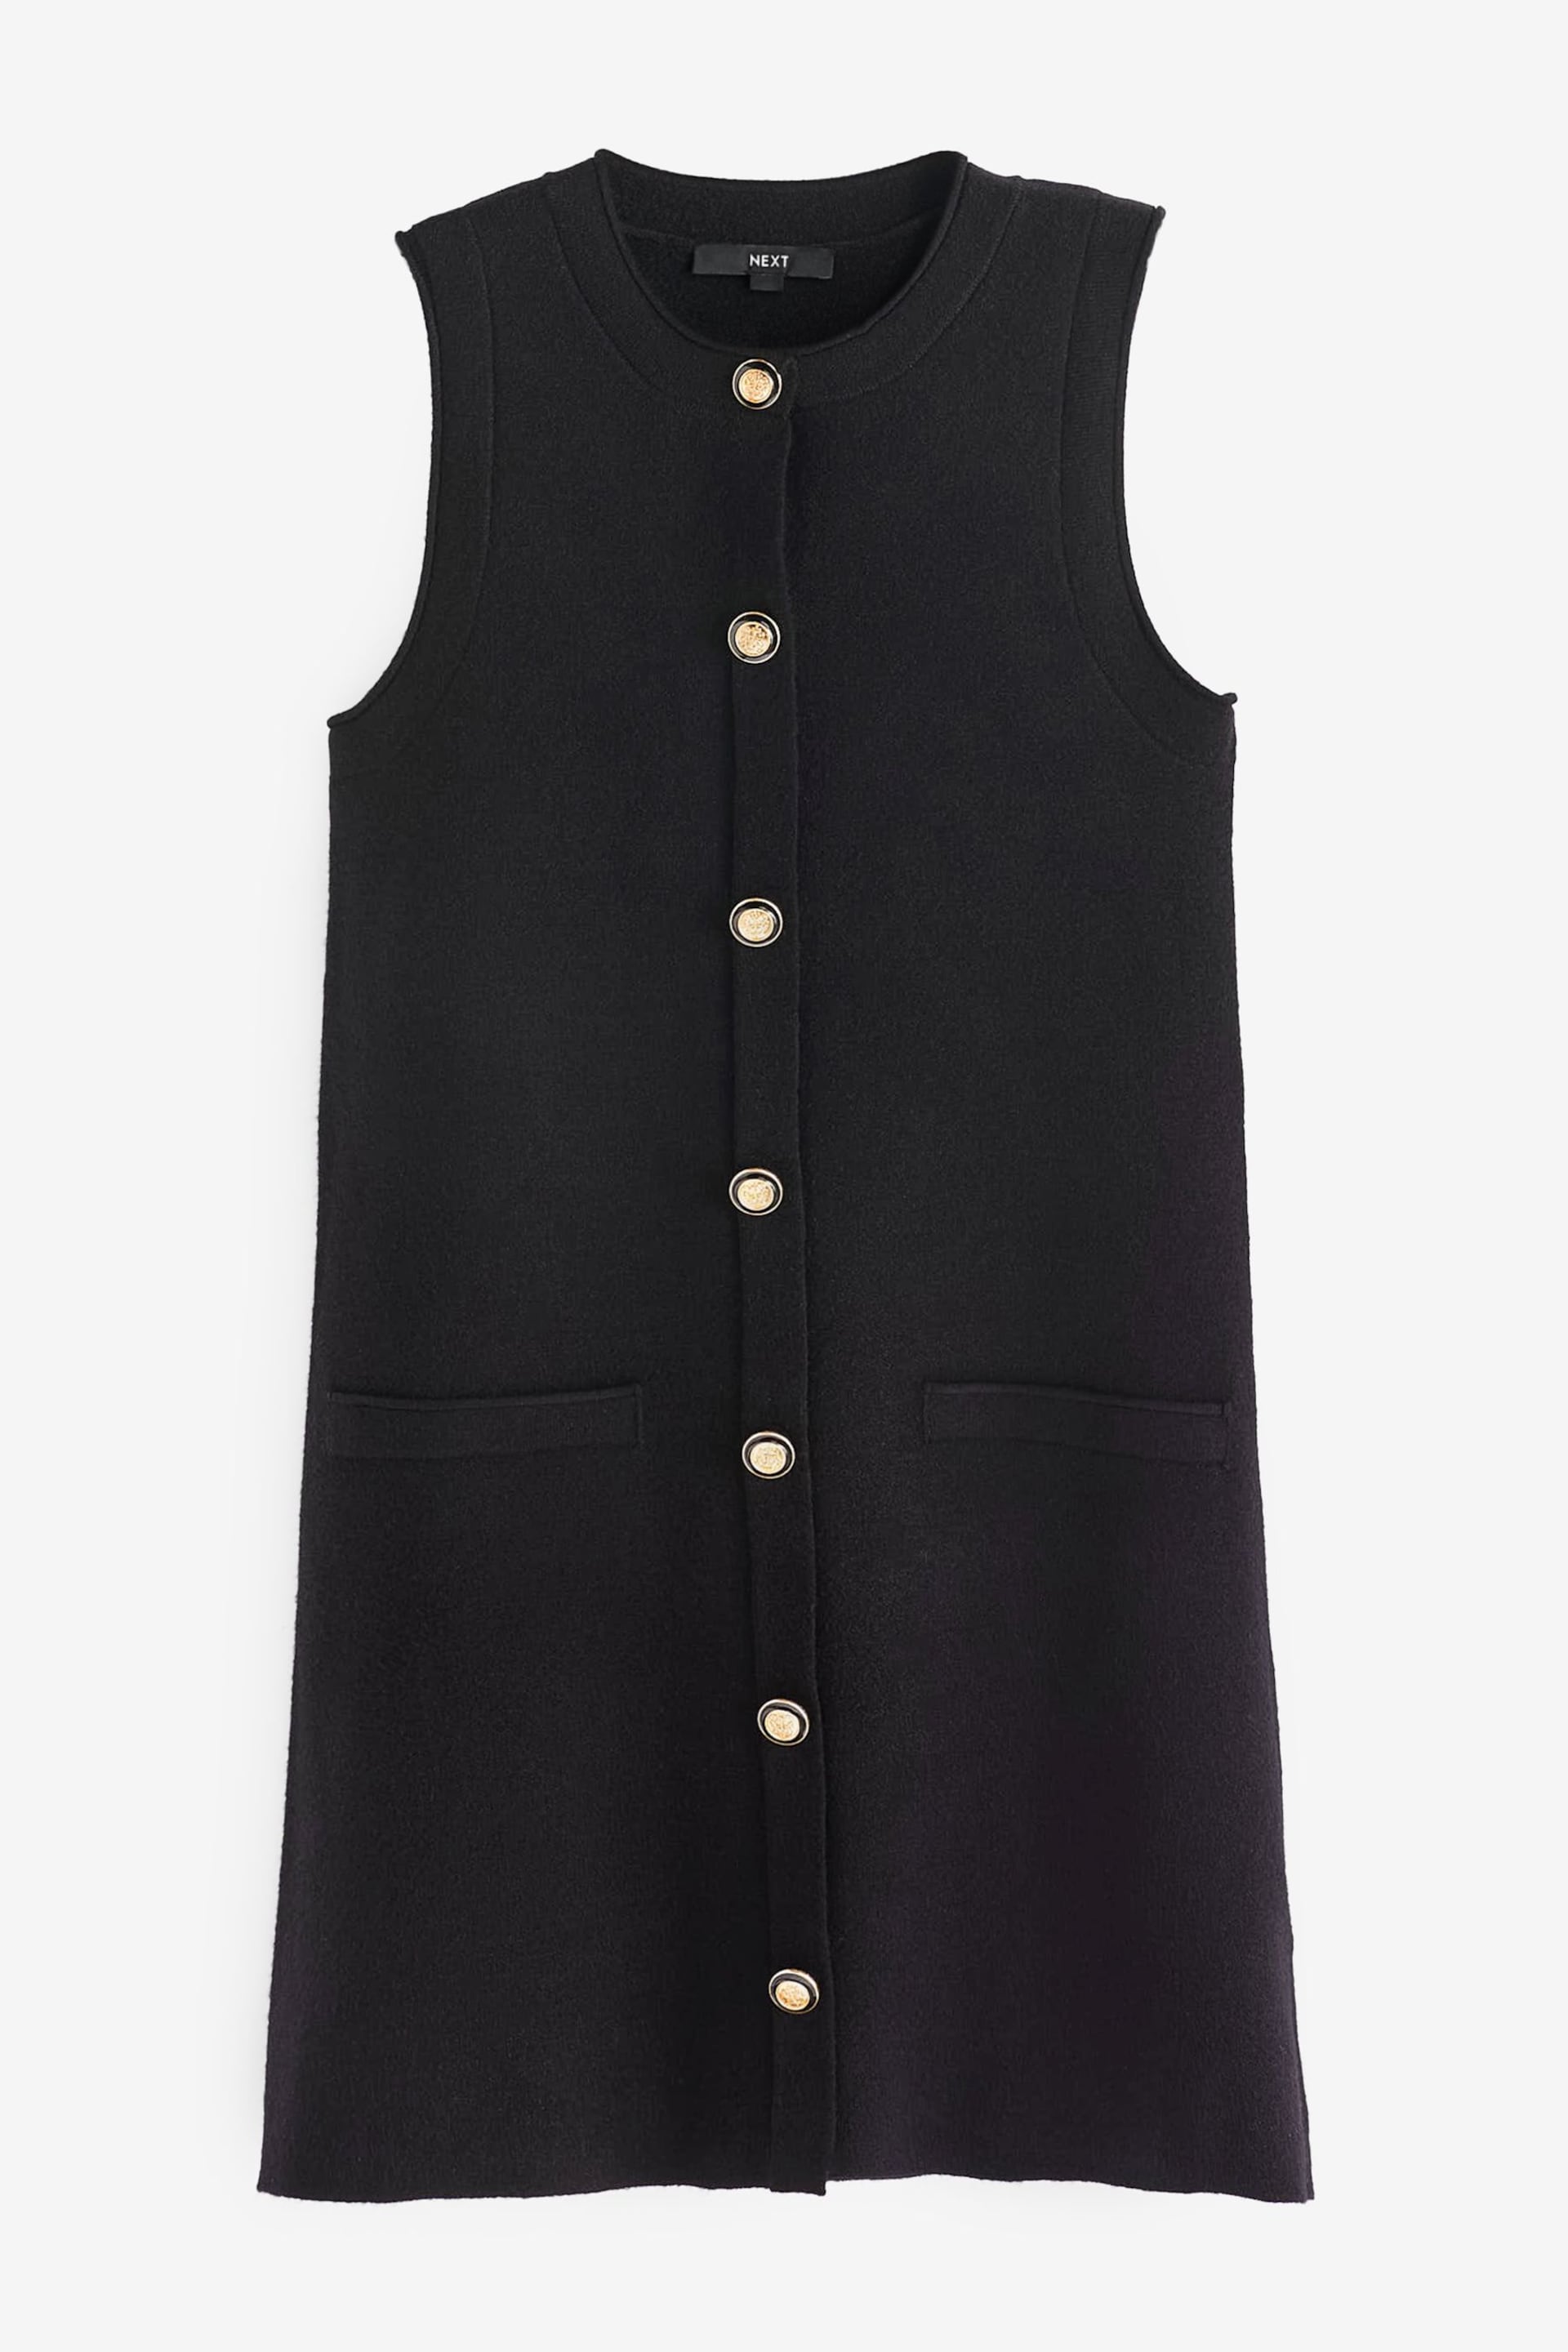 Black Rochelle Black Sleeveless Mini Dress - Image 5 of 6